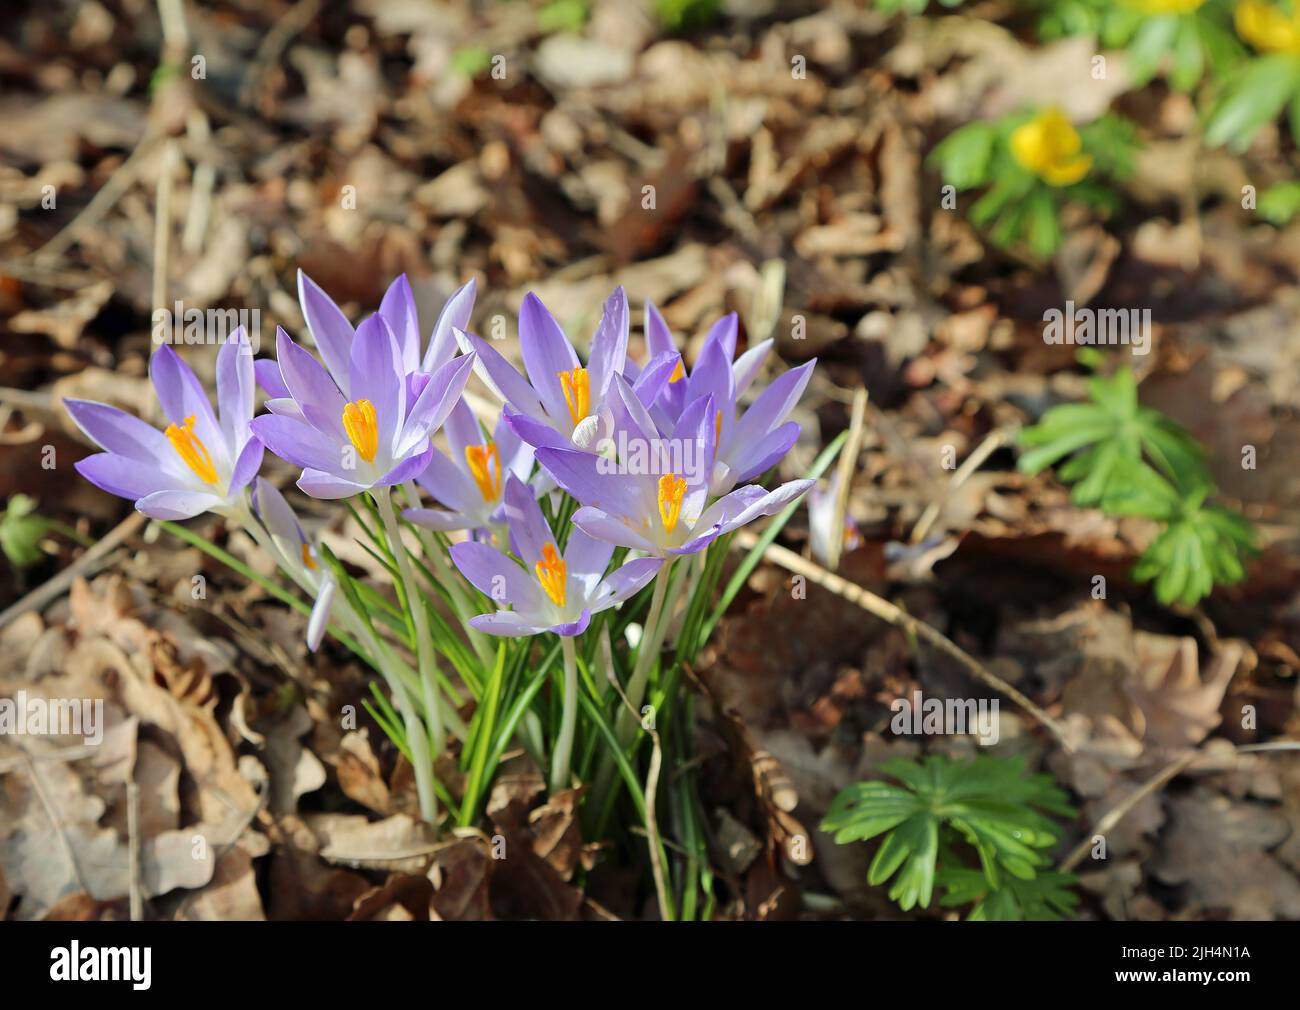 Group of Crocus flowers Stock Photo